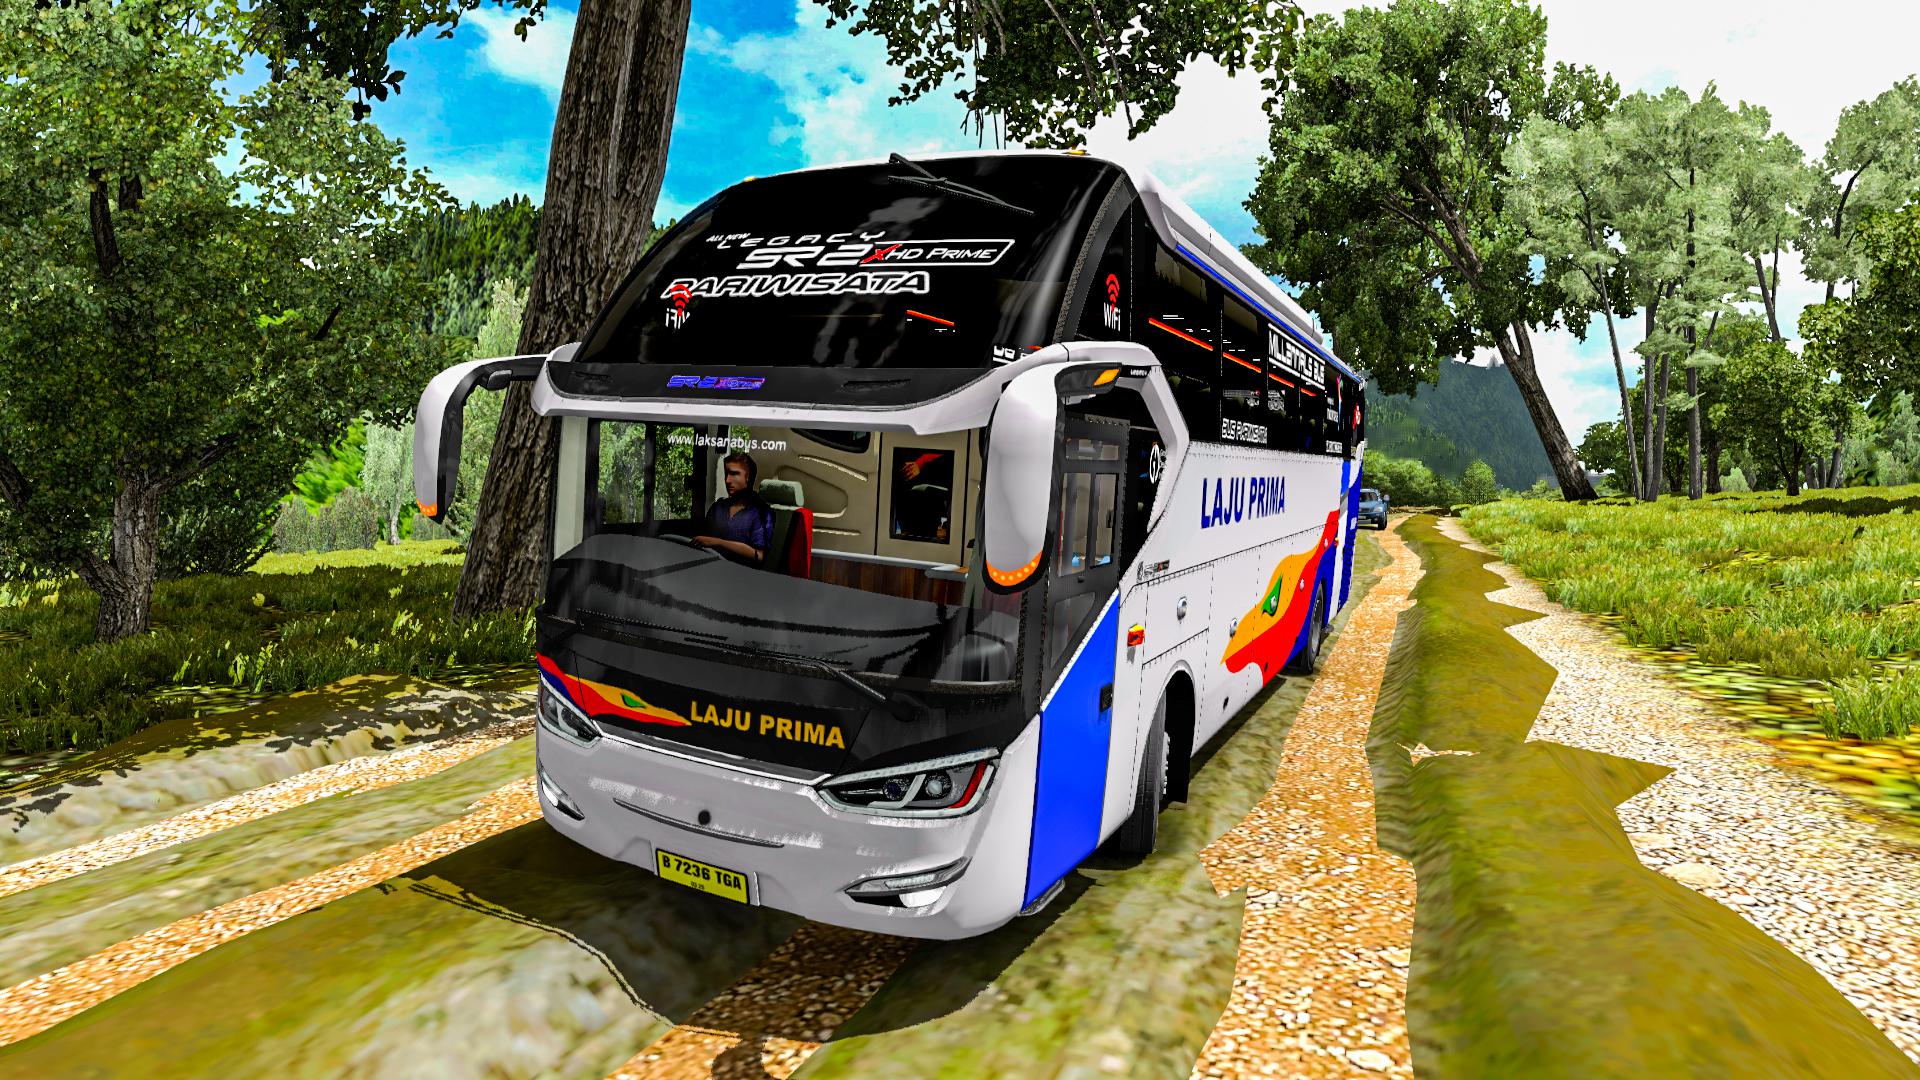  Bus  Laksana SR2 XHD PRIME ETS2 1 38 Allmods net